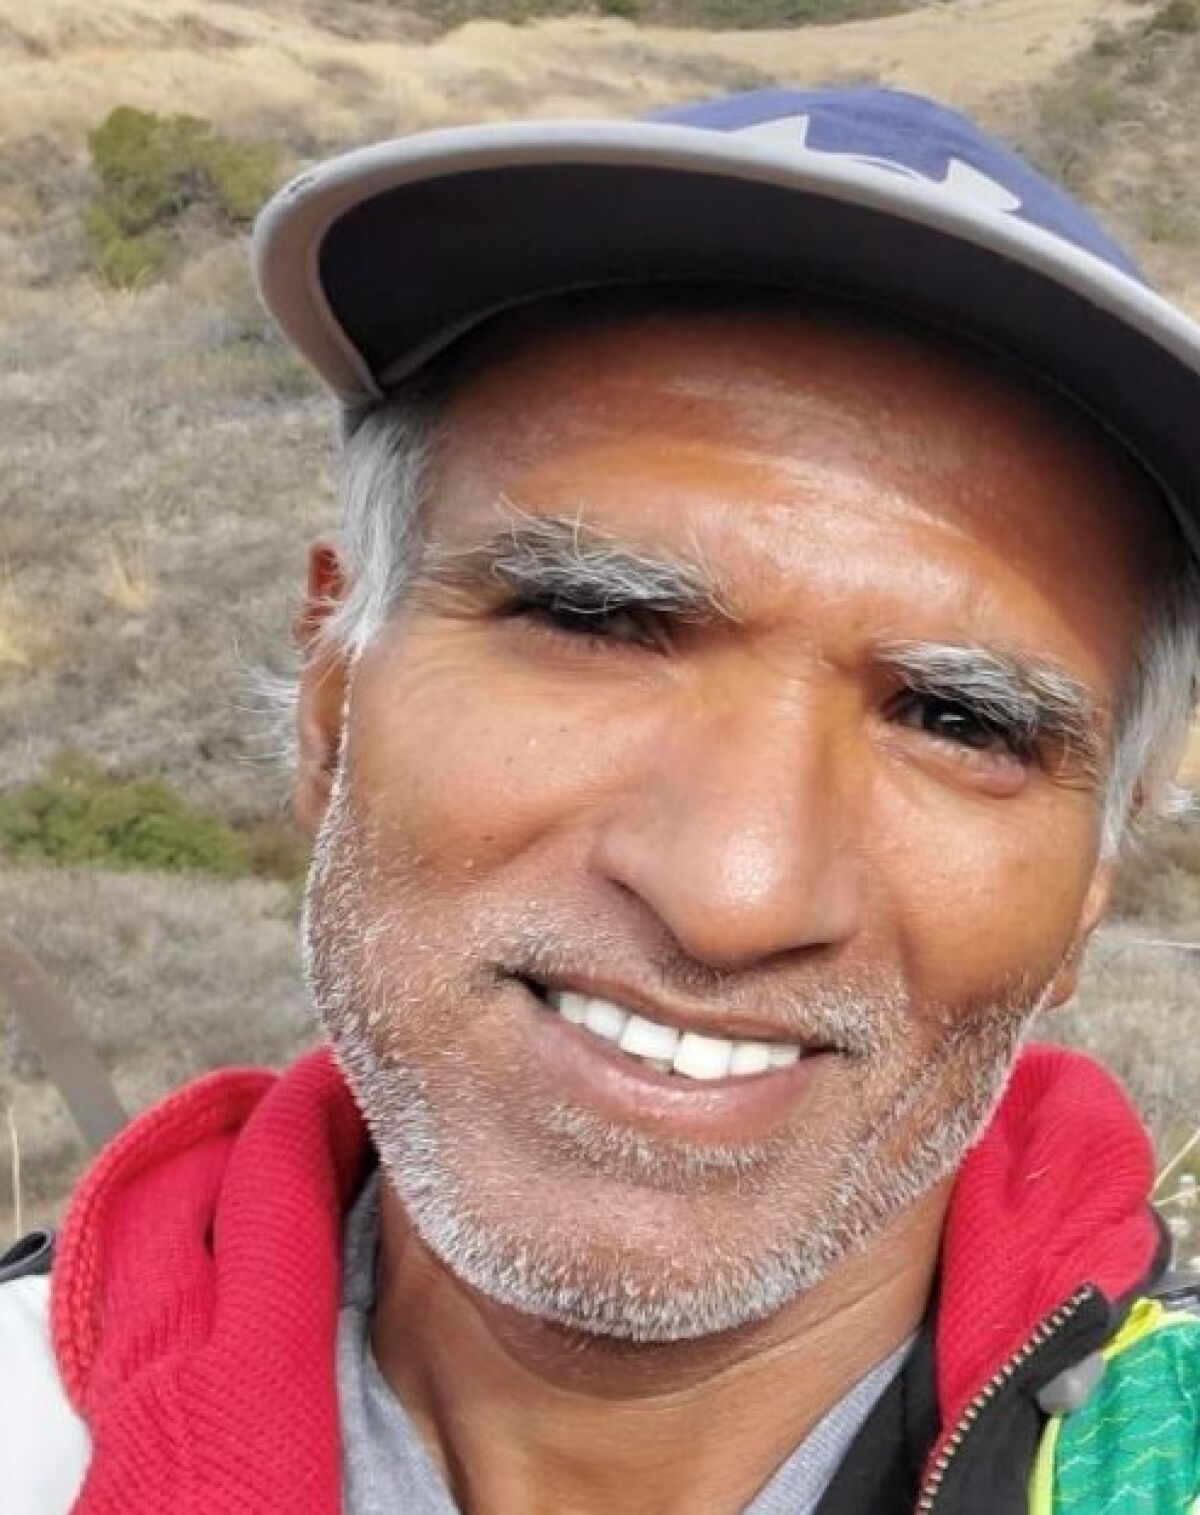 Sreenivas "Sree" Mokkapati, 52, went missing while hiking Mount Baldy on Sunday.